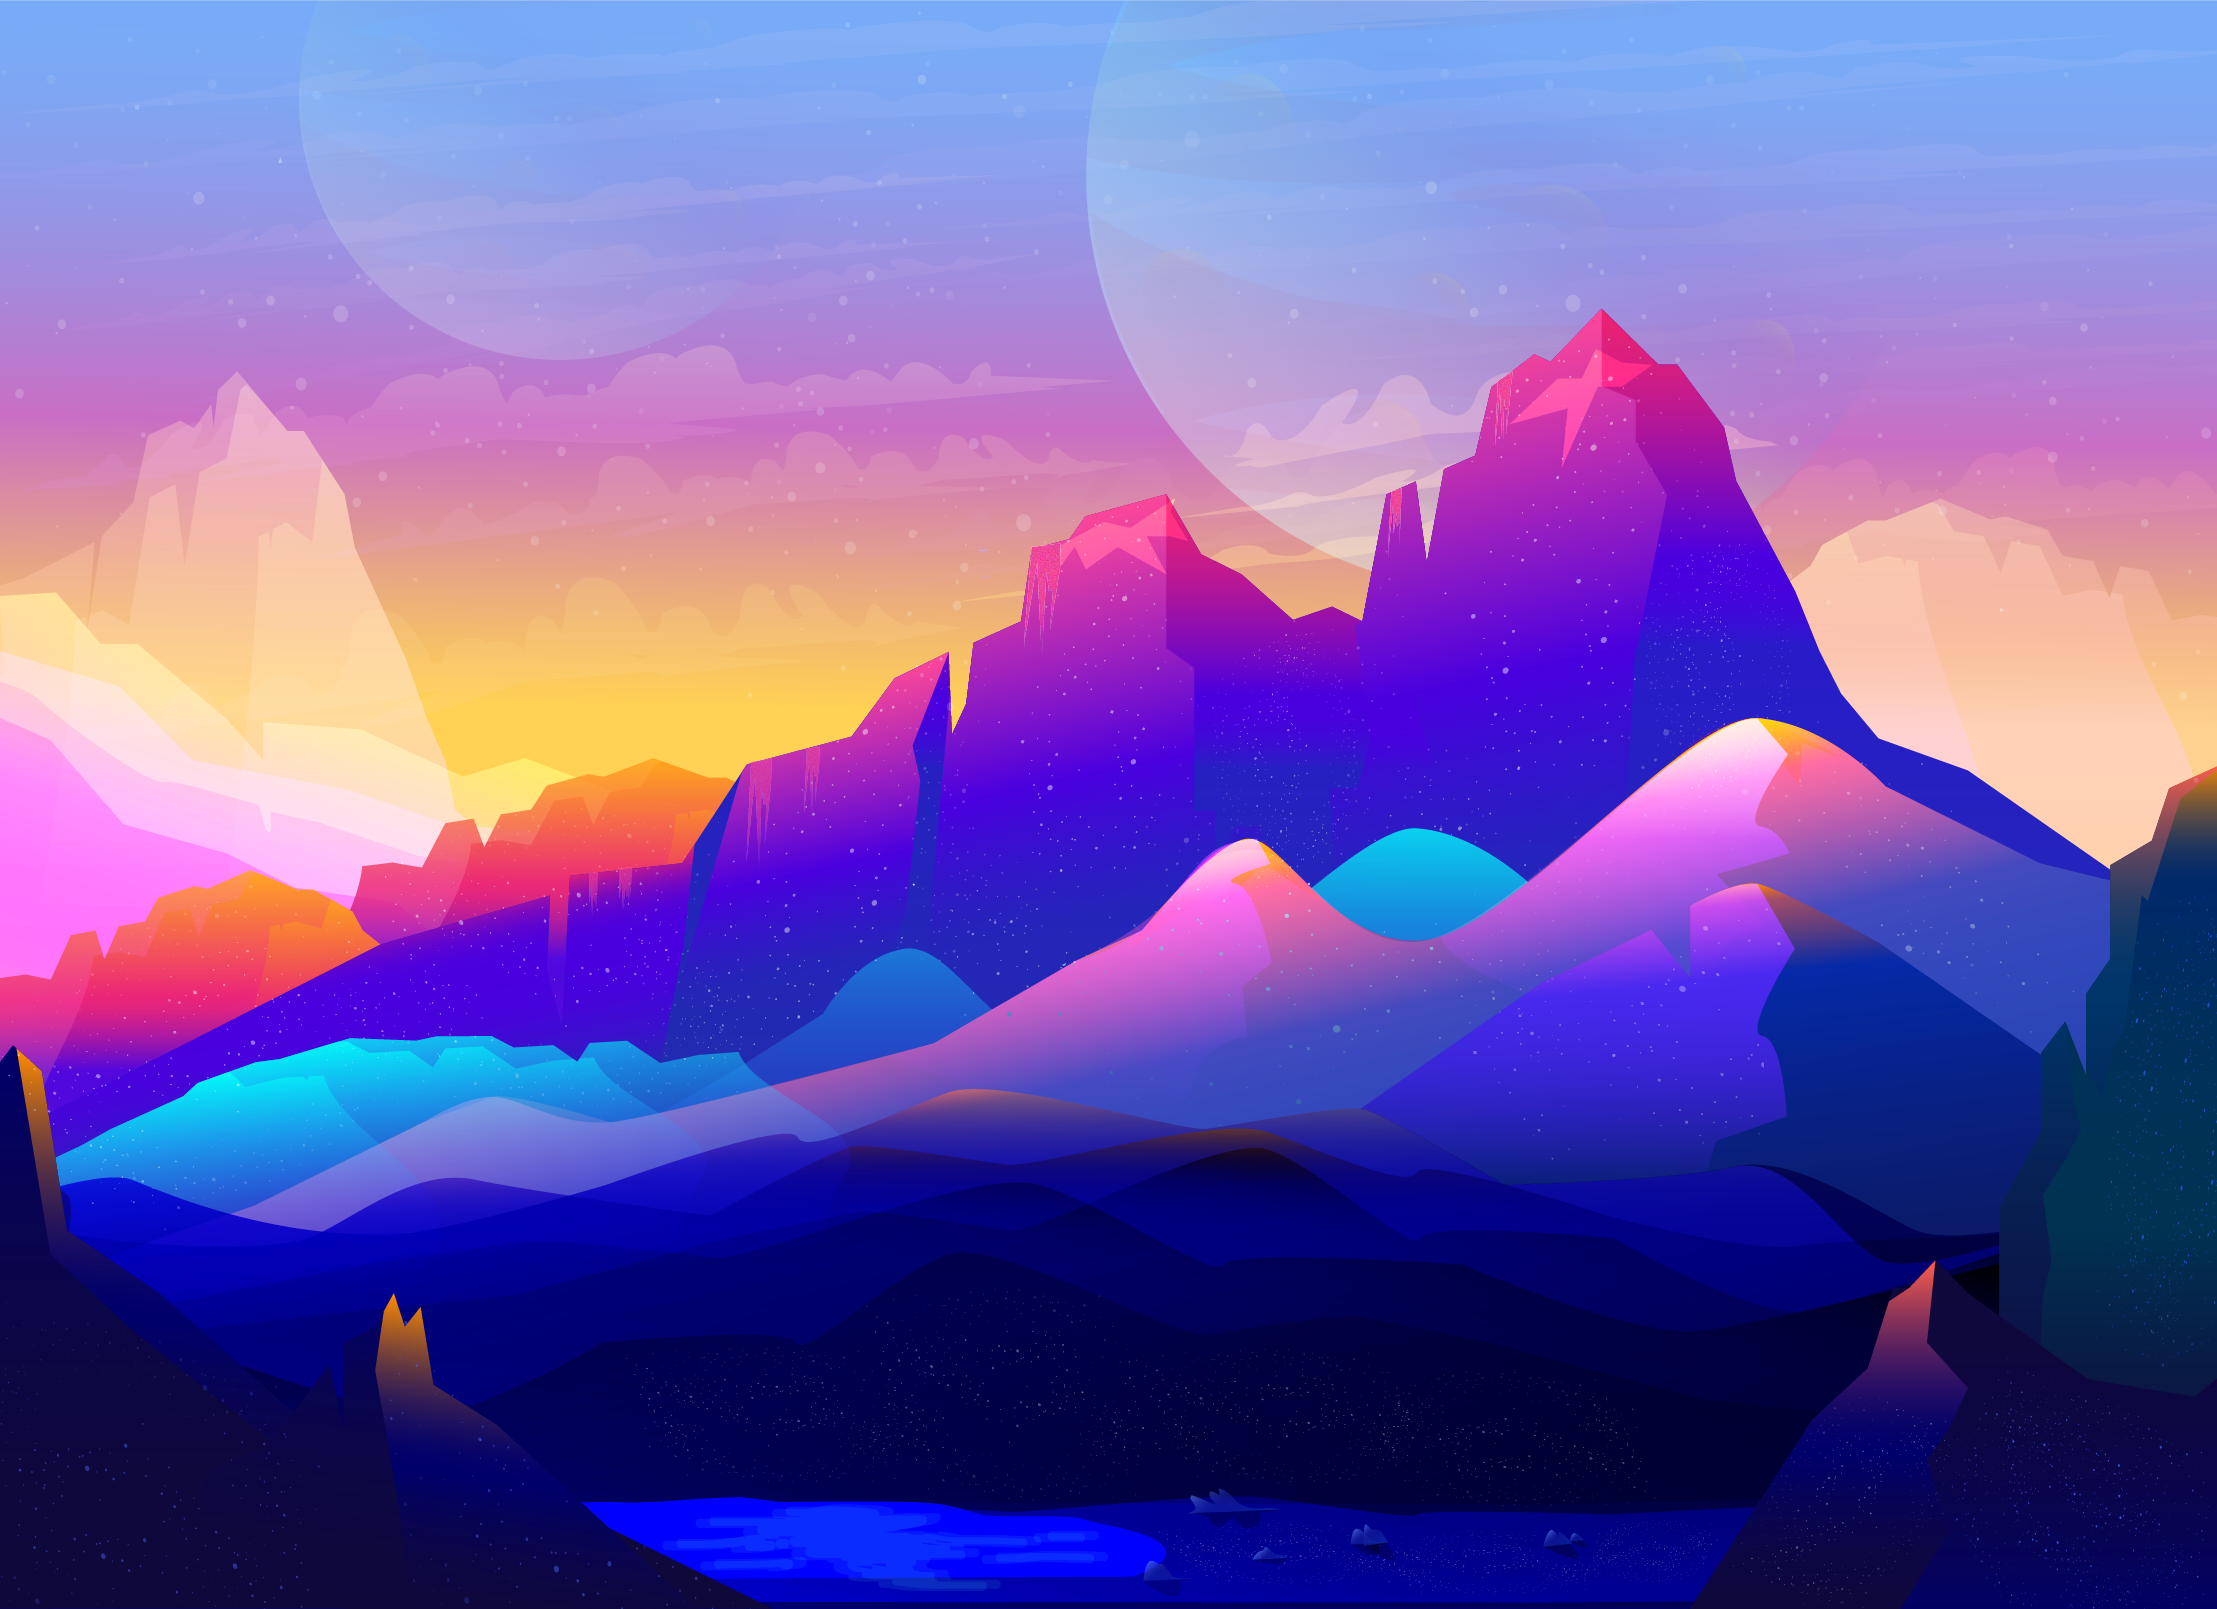 Wallpaper lake, woonden fence, mountains, landscape, sunset, neon art desktop  wallpaper, hd image, picture, background, f80e73